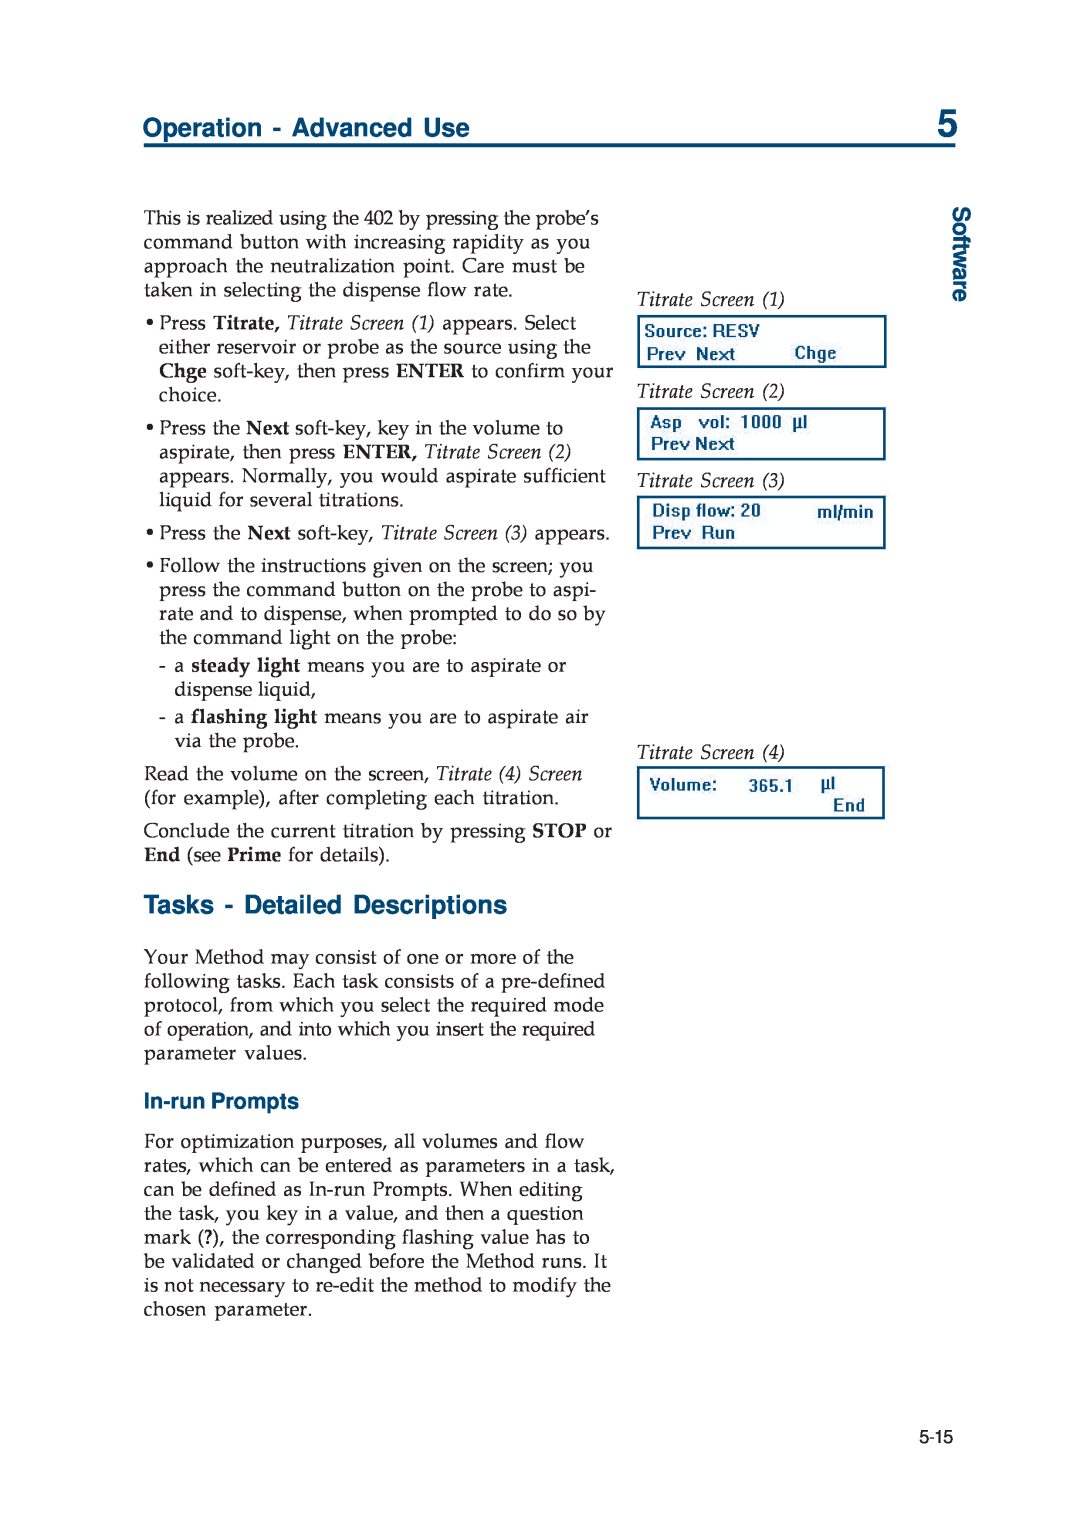 Gilson 402 manual Tasks - Detailed Descriptions, Titrate Screen Titrate Screen Titrate Screen Titrate Screen, Software 